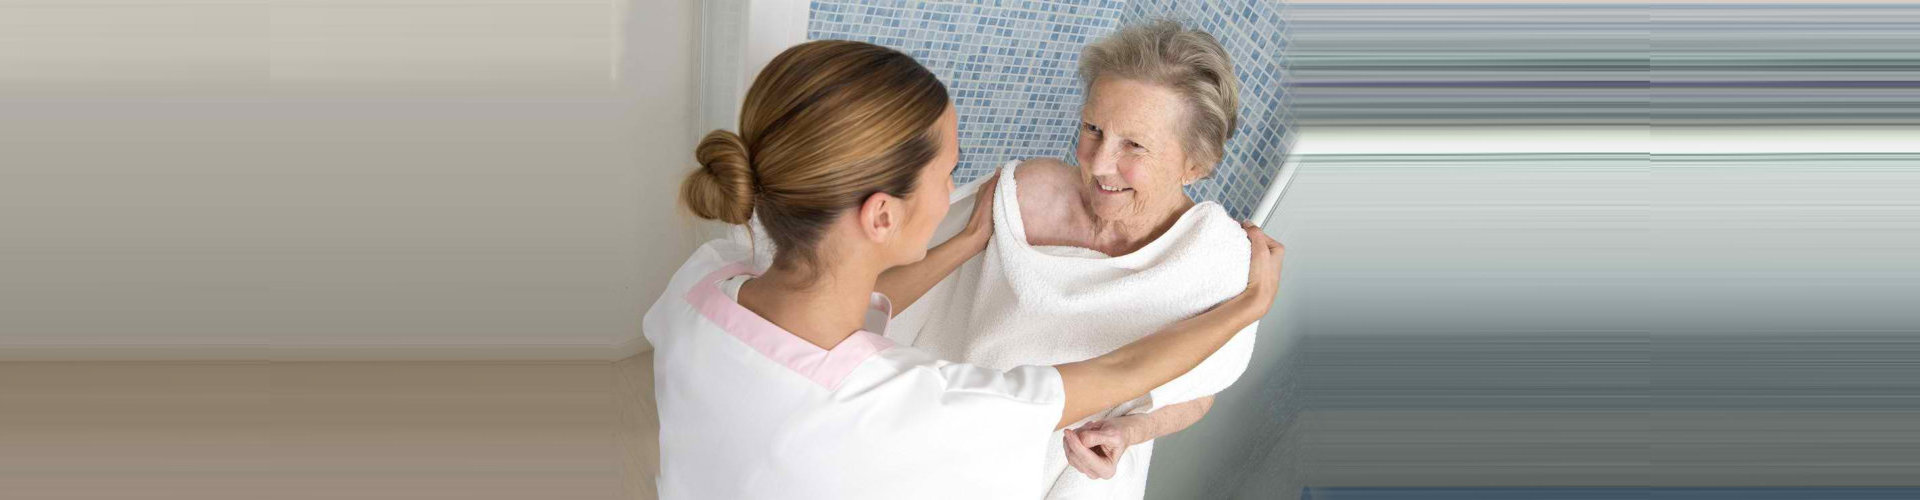 "caregiver assisting a senior woman bathing